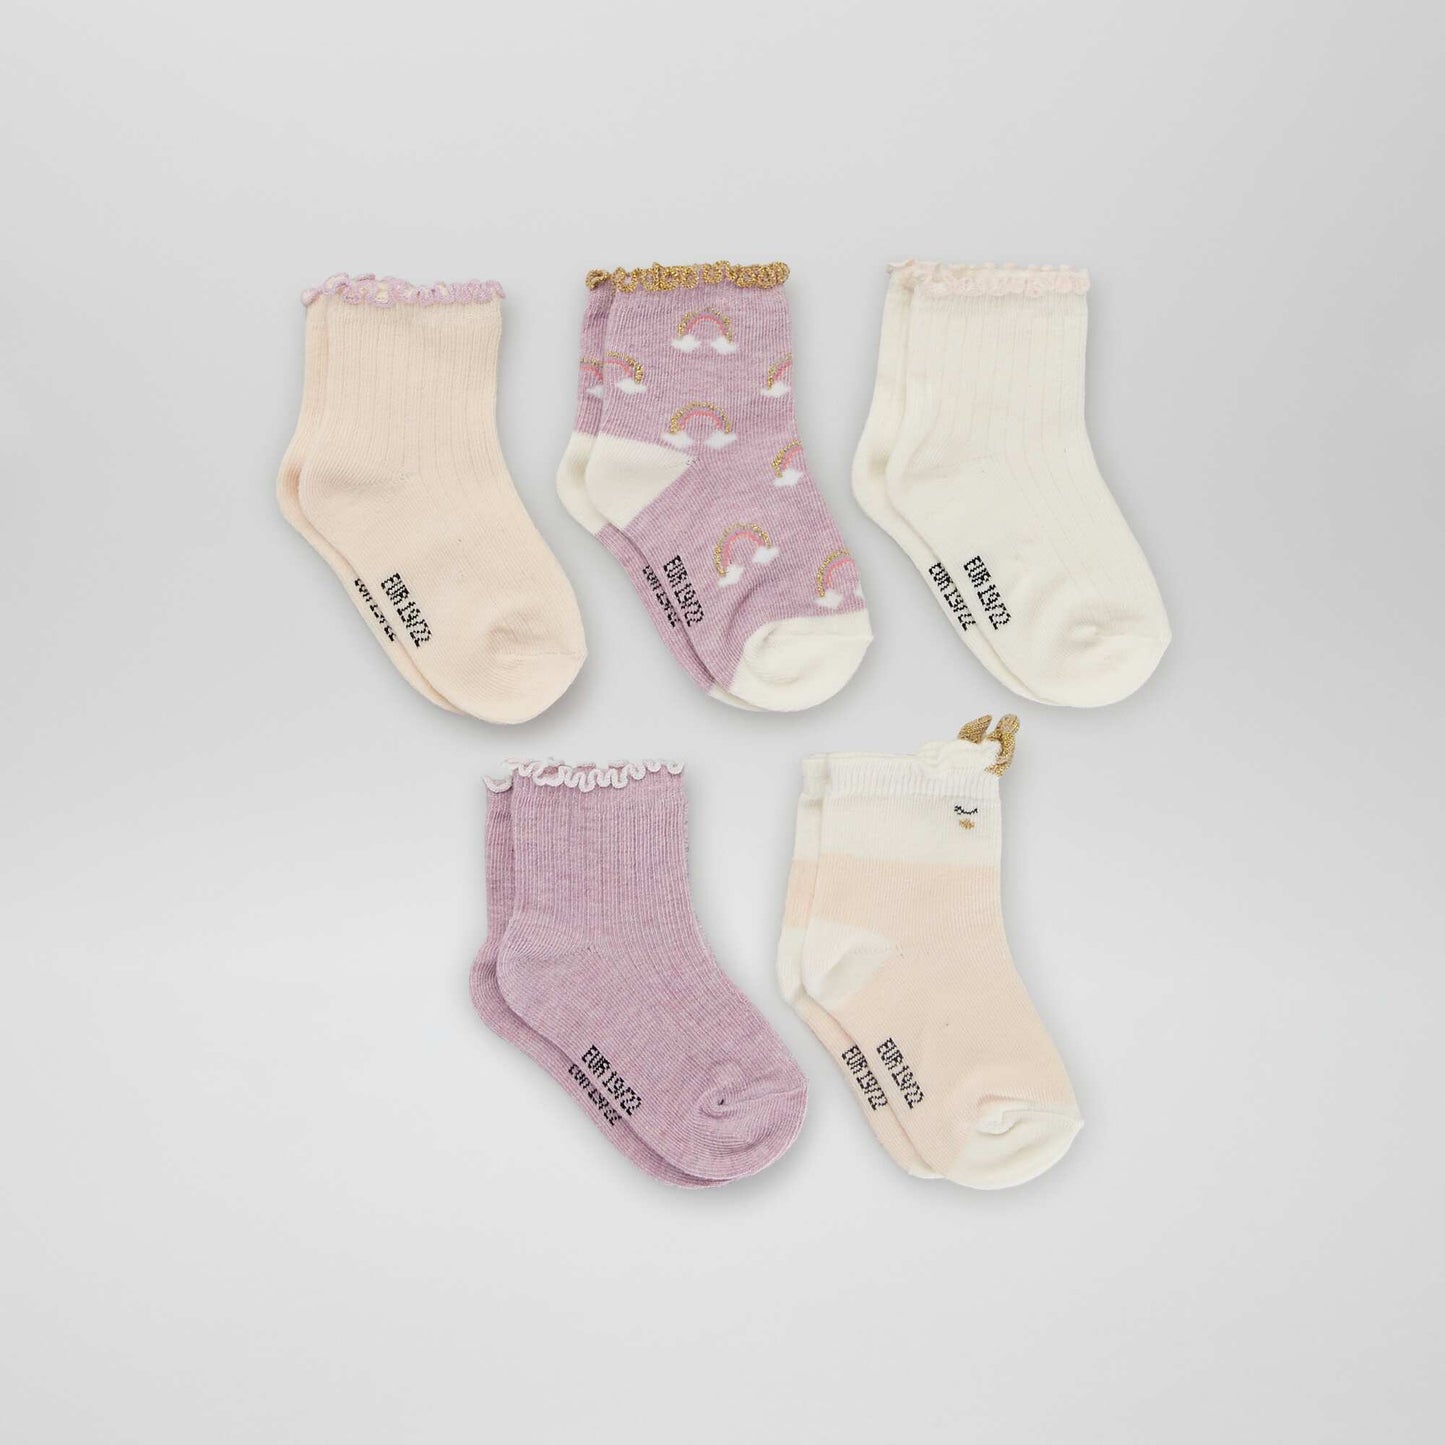 Fancy socks - Pack of 5 RAINBOW